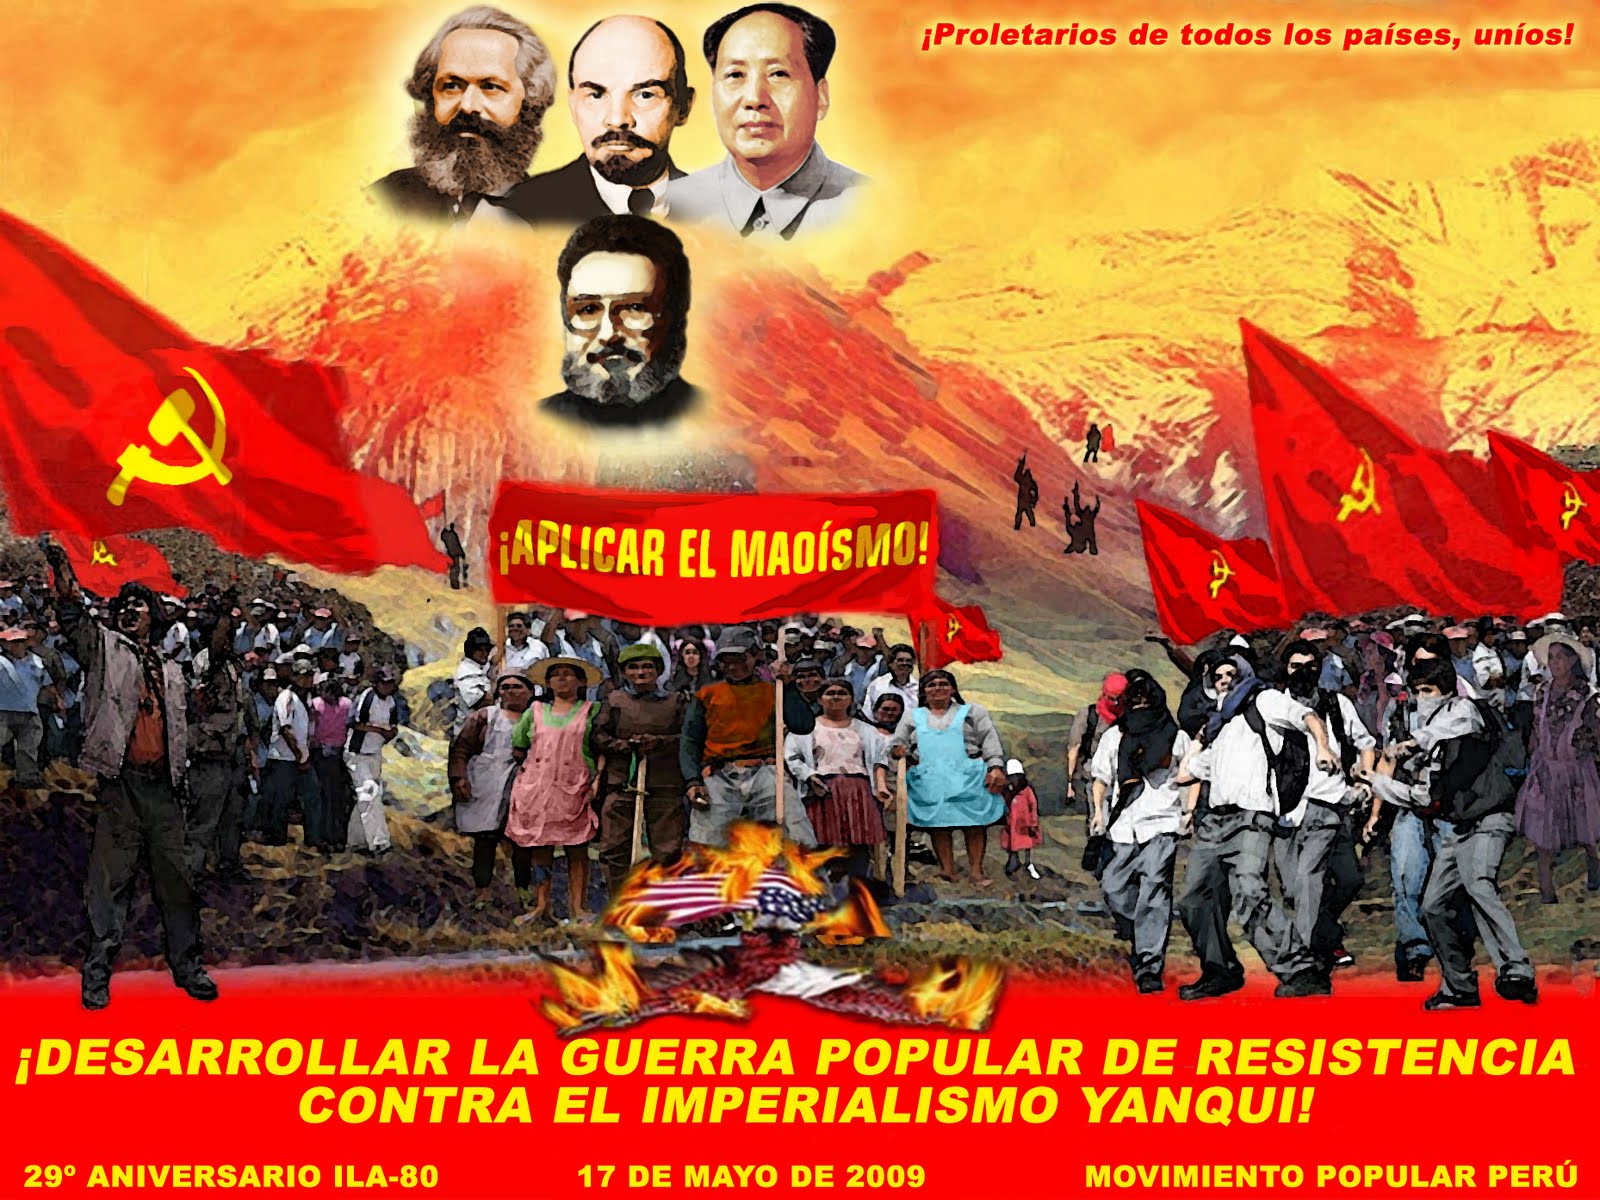 The Cahokian Anti American Art Burning Path Of Maoism